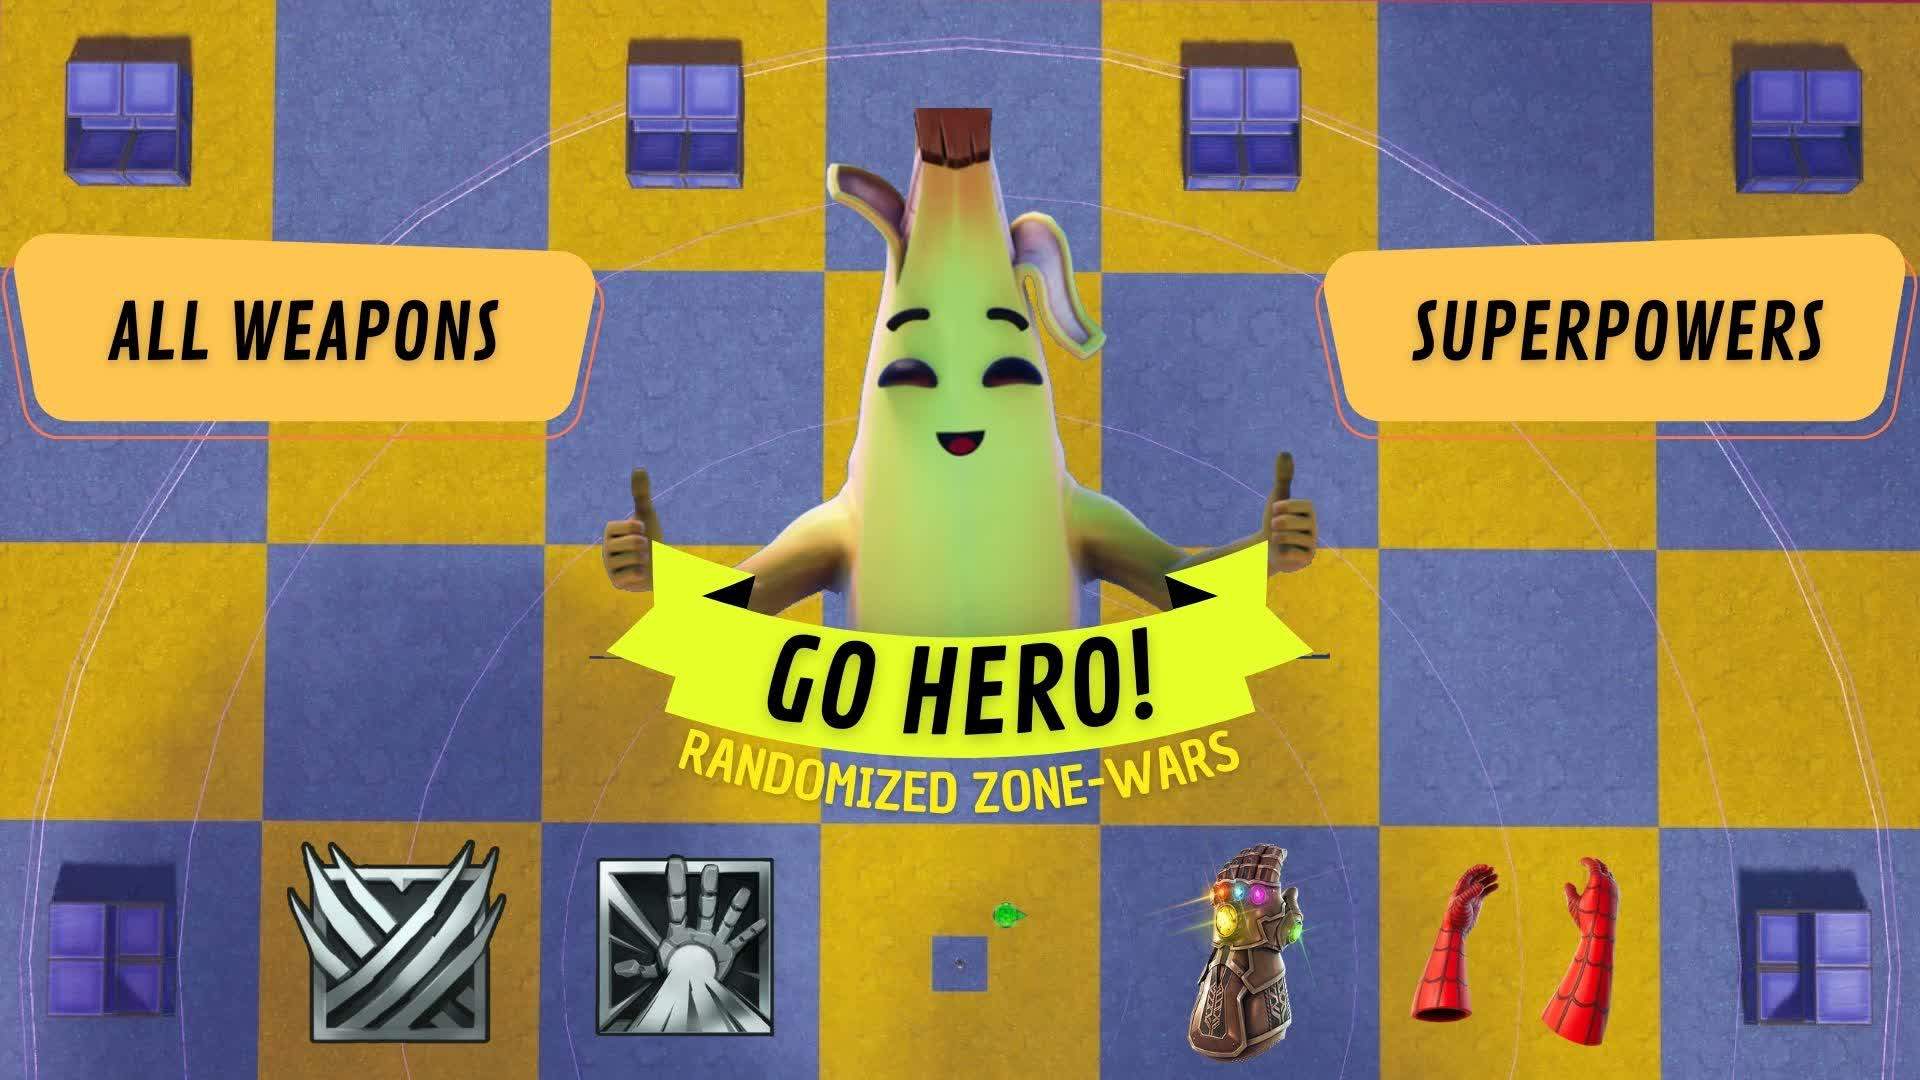 GO HERO!: RANDOMIZED ZONEWARS